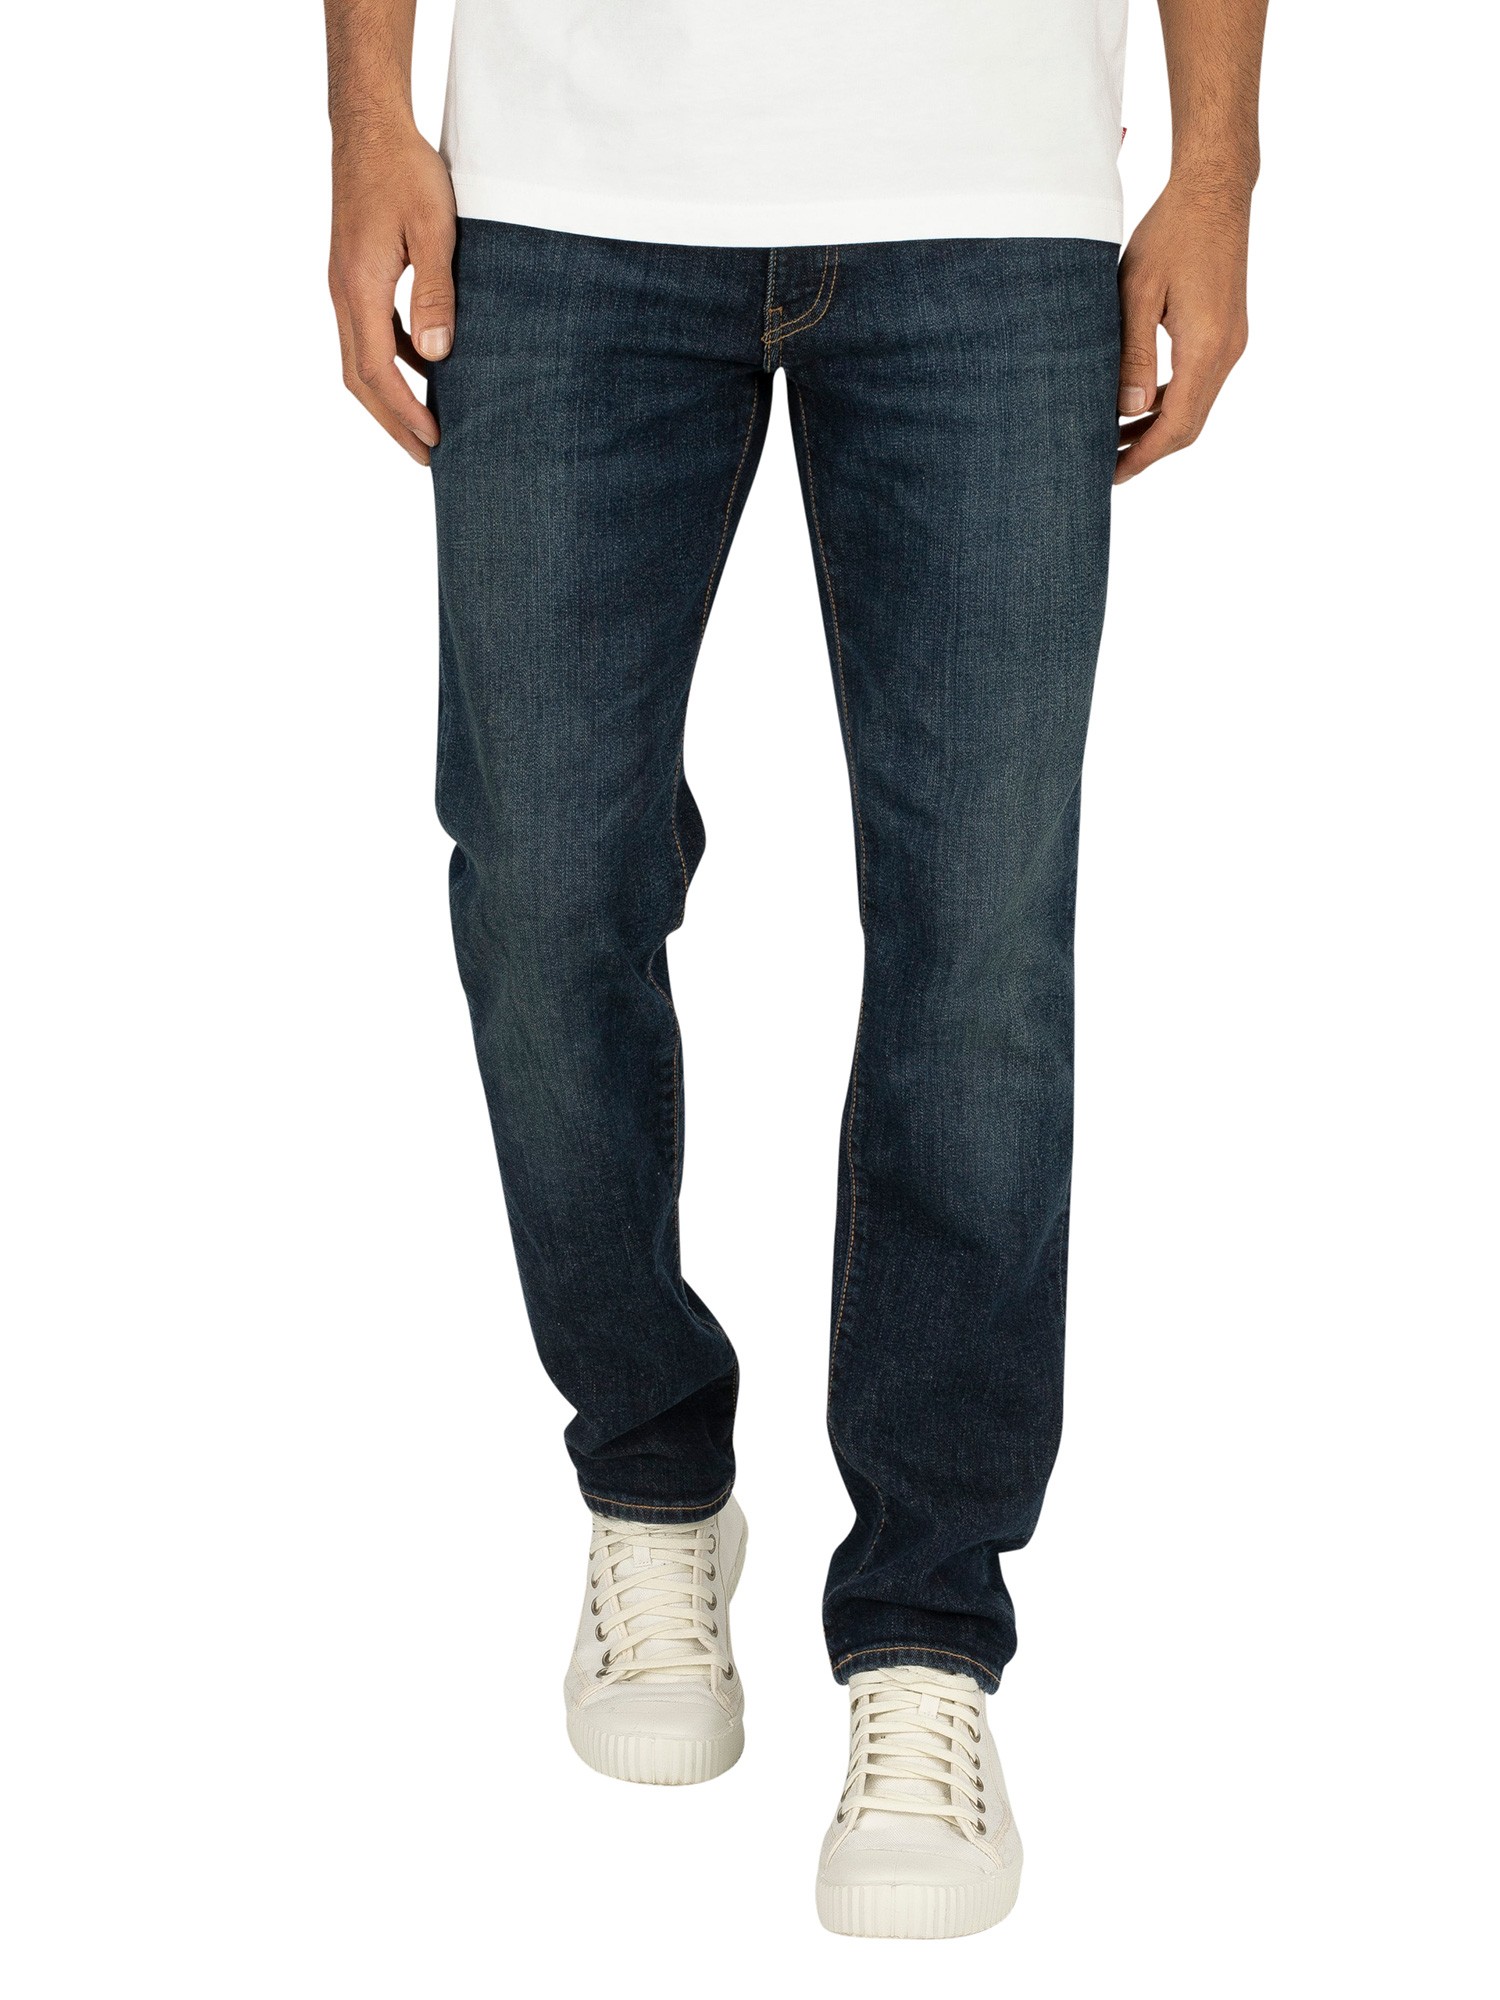 levis 511 slim jeans